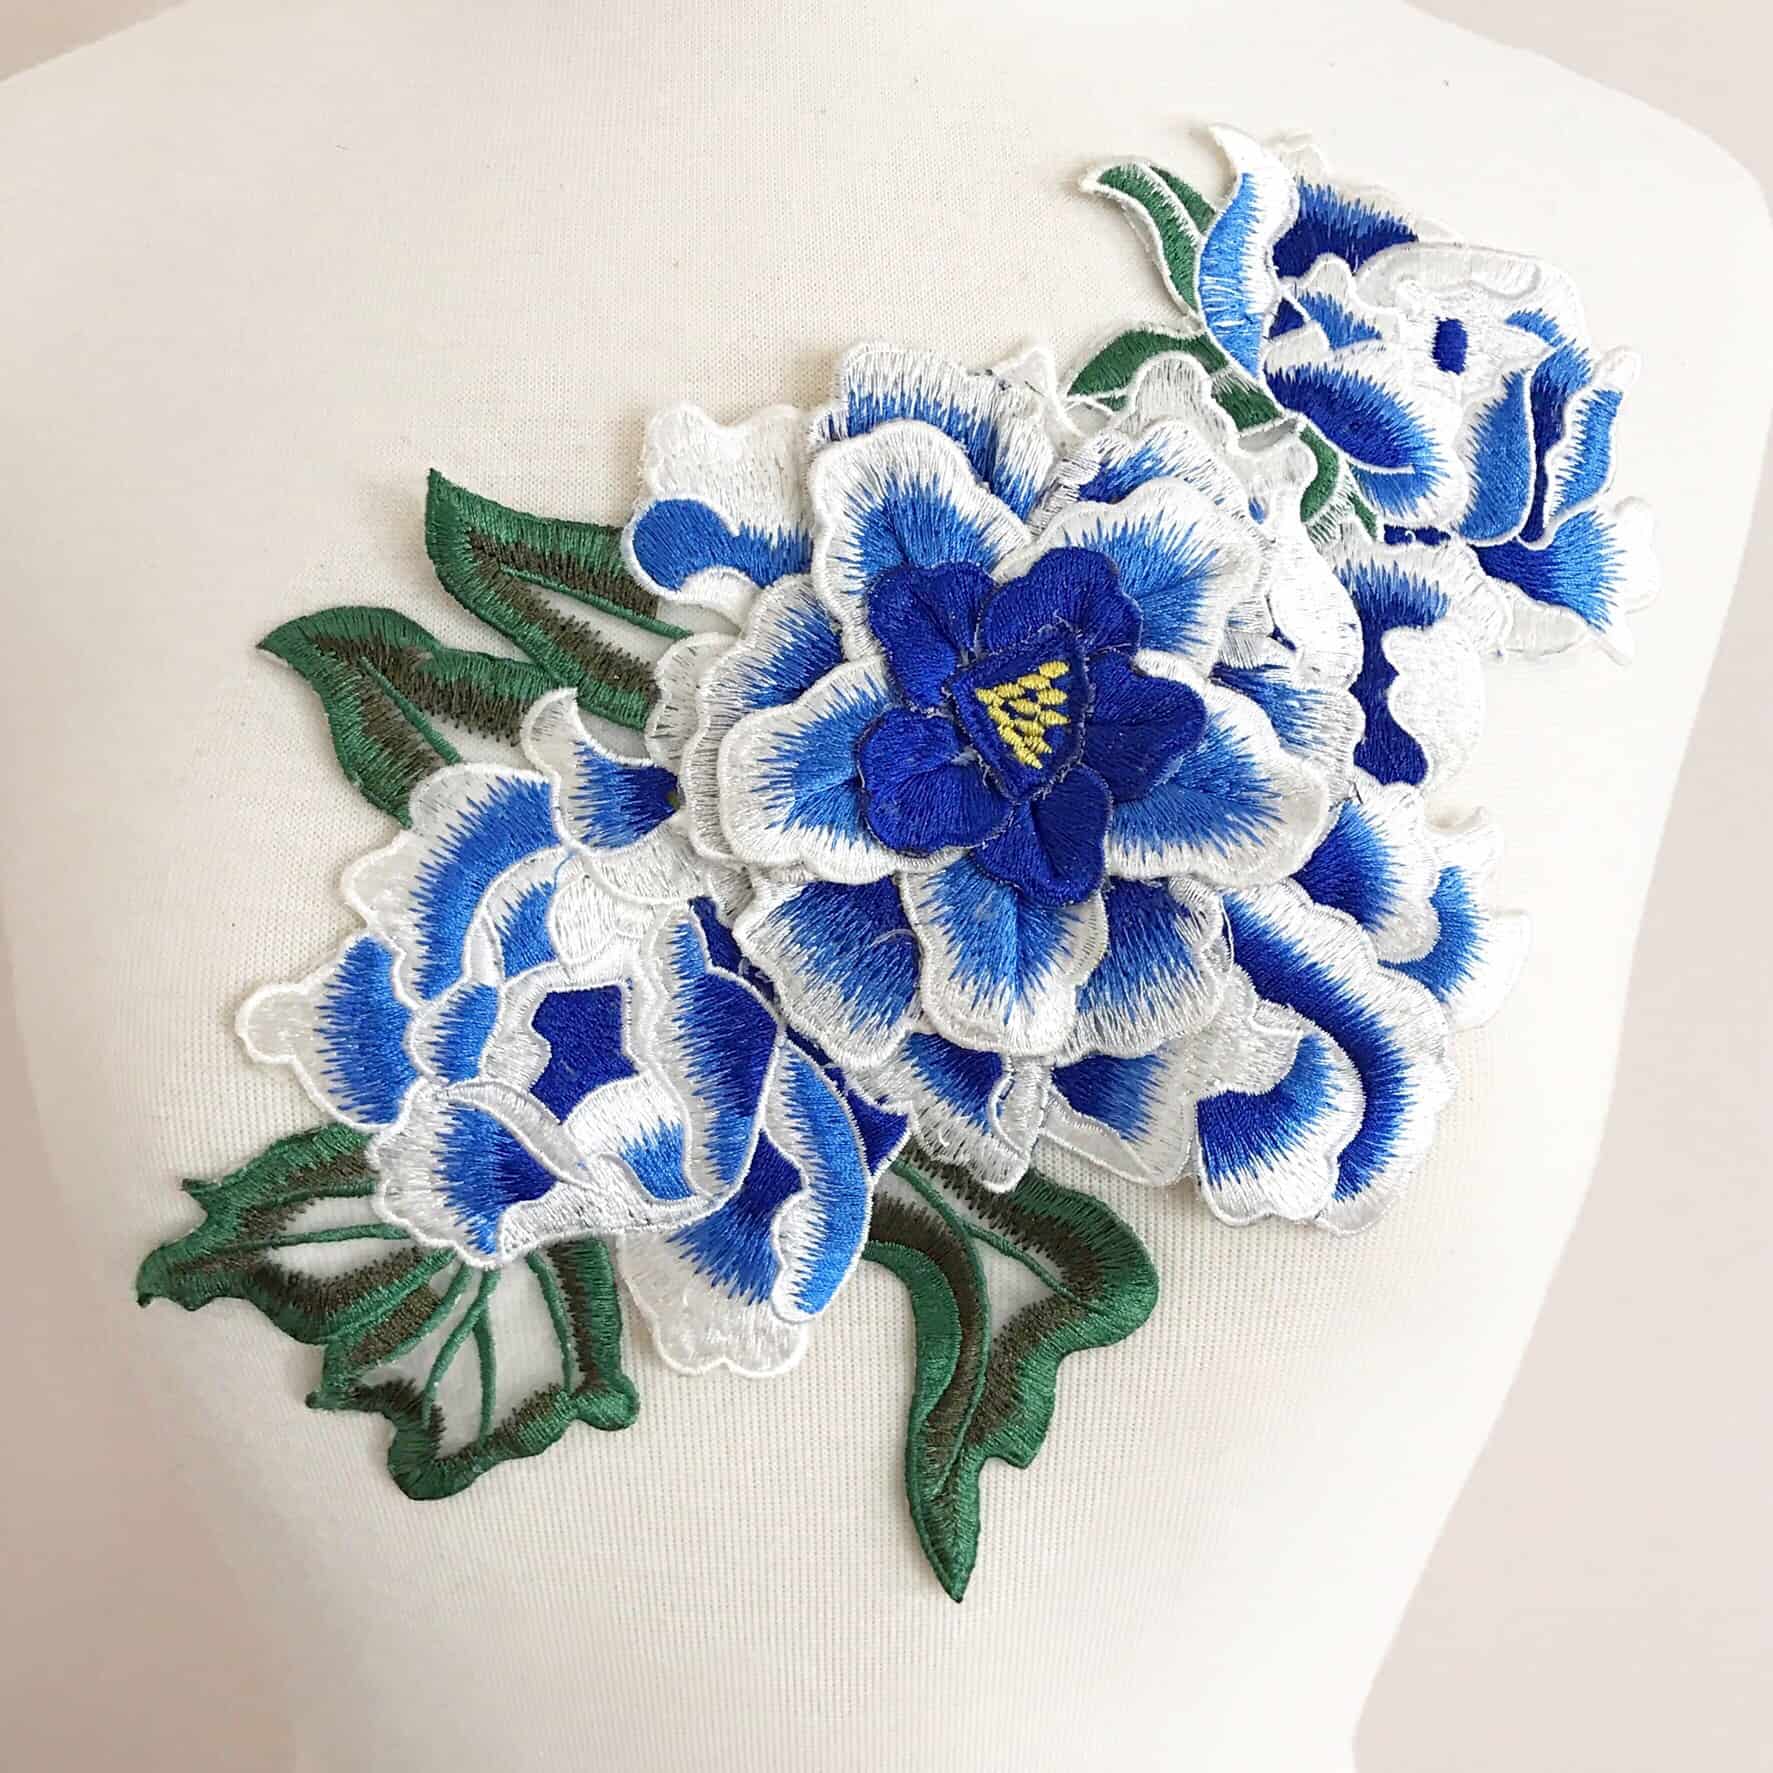 3D Applique Embroidered Floral Blue Rose Craft Patch